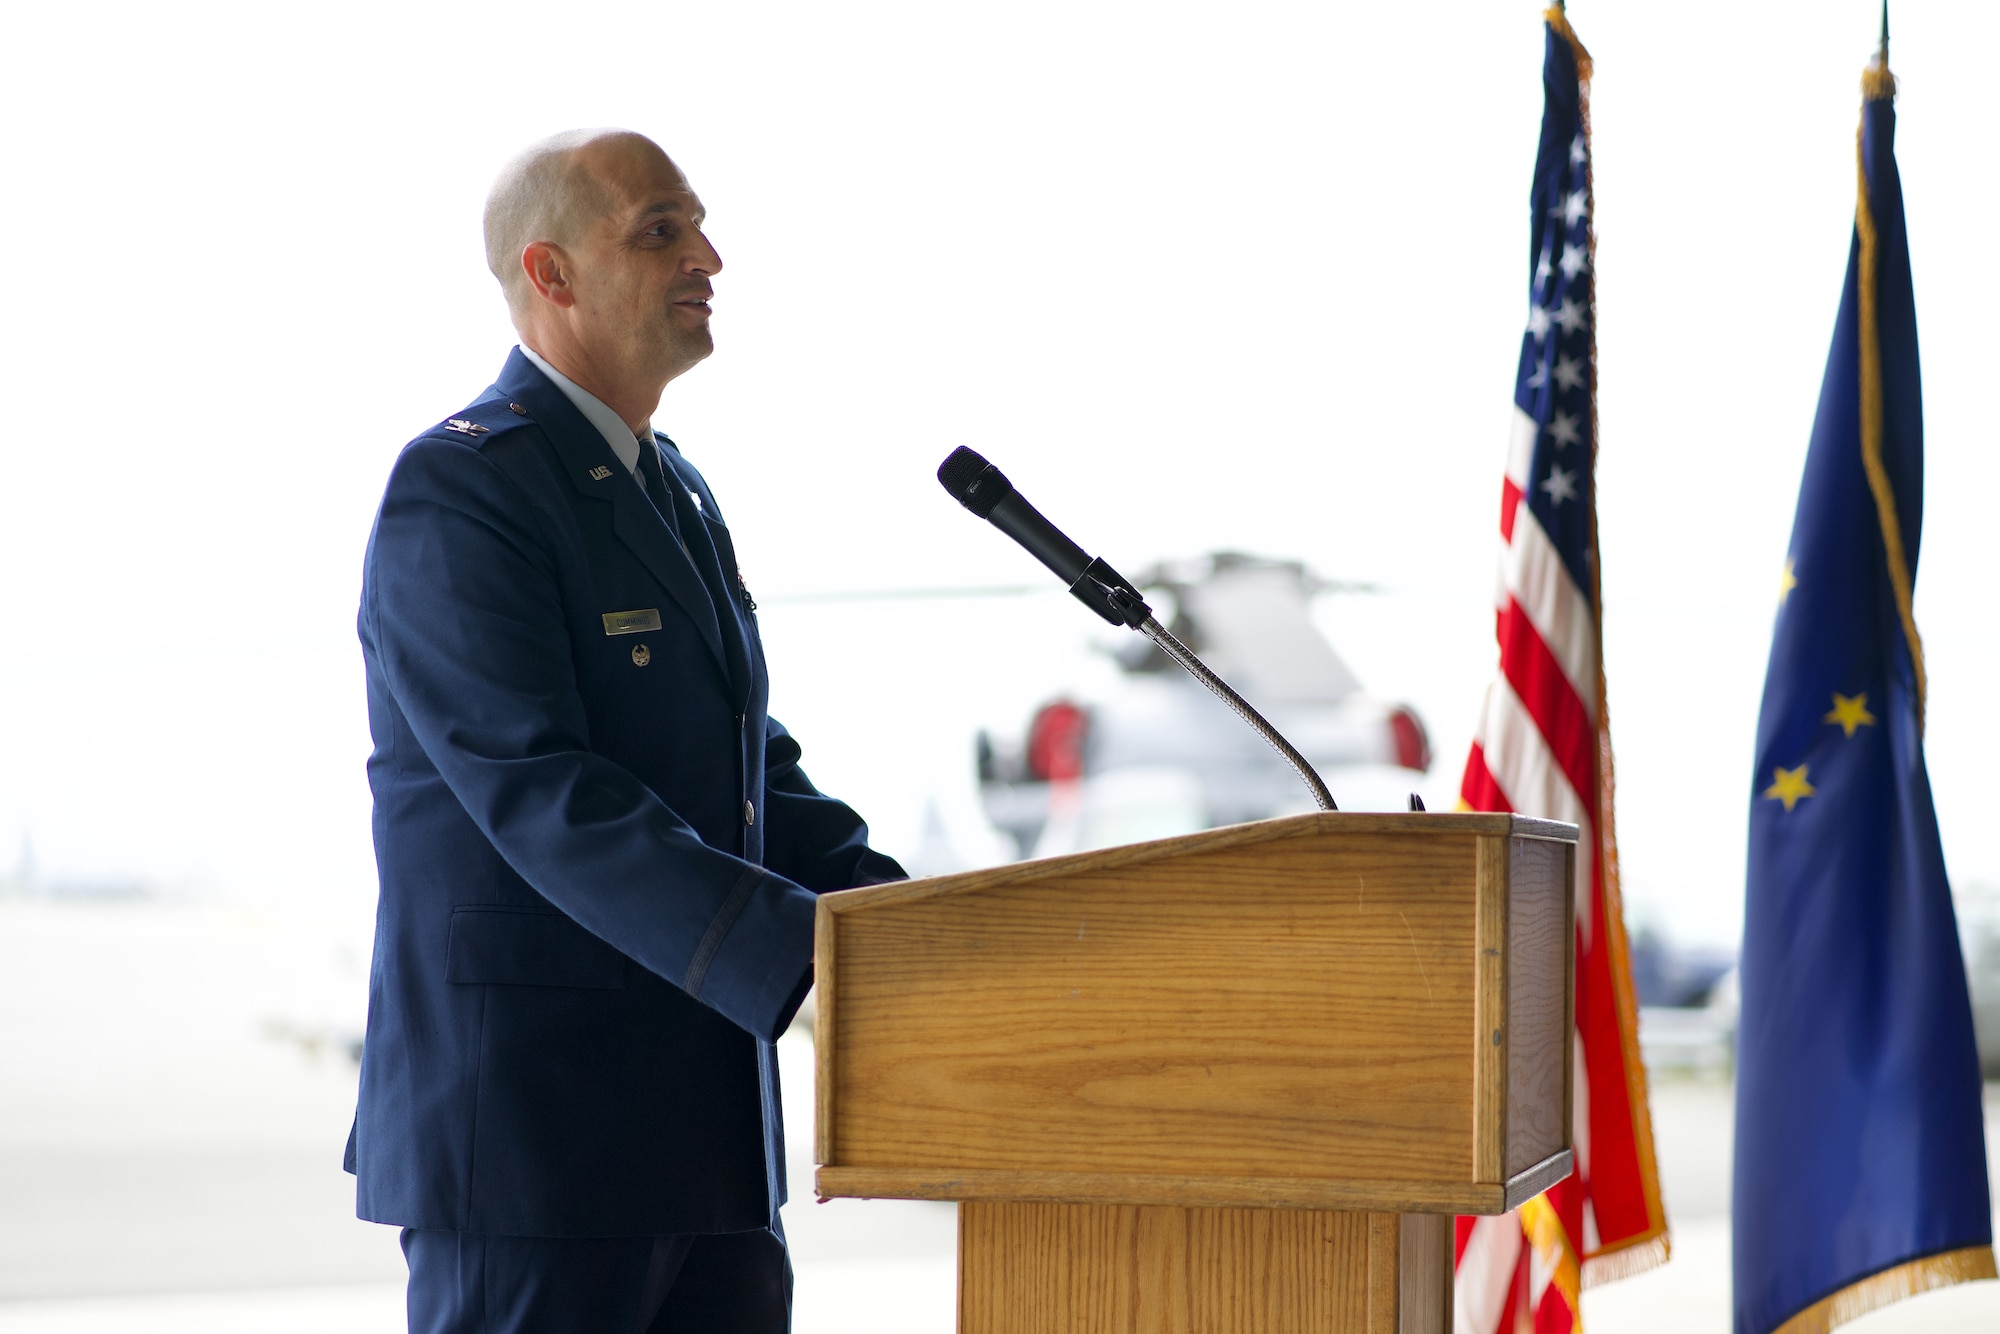 Cummings succeeds Soto as 176th Maintenance Group commander